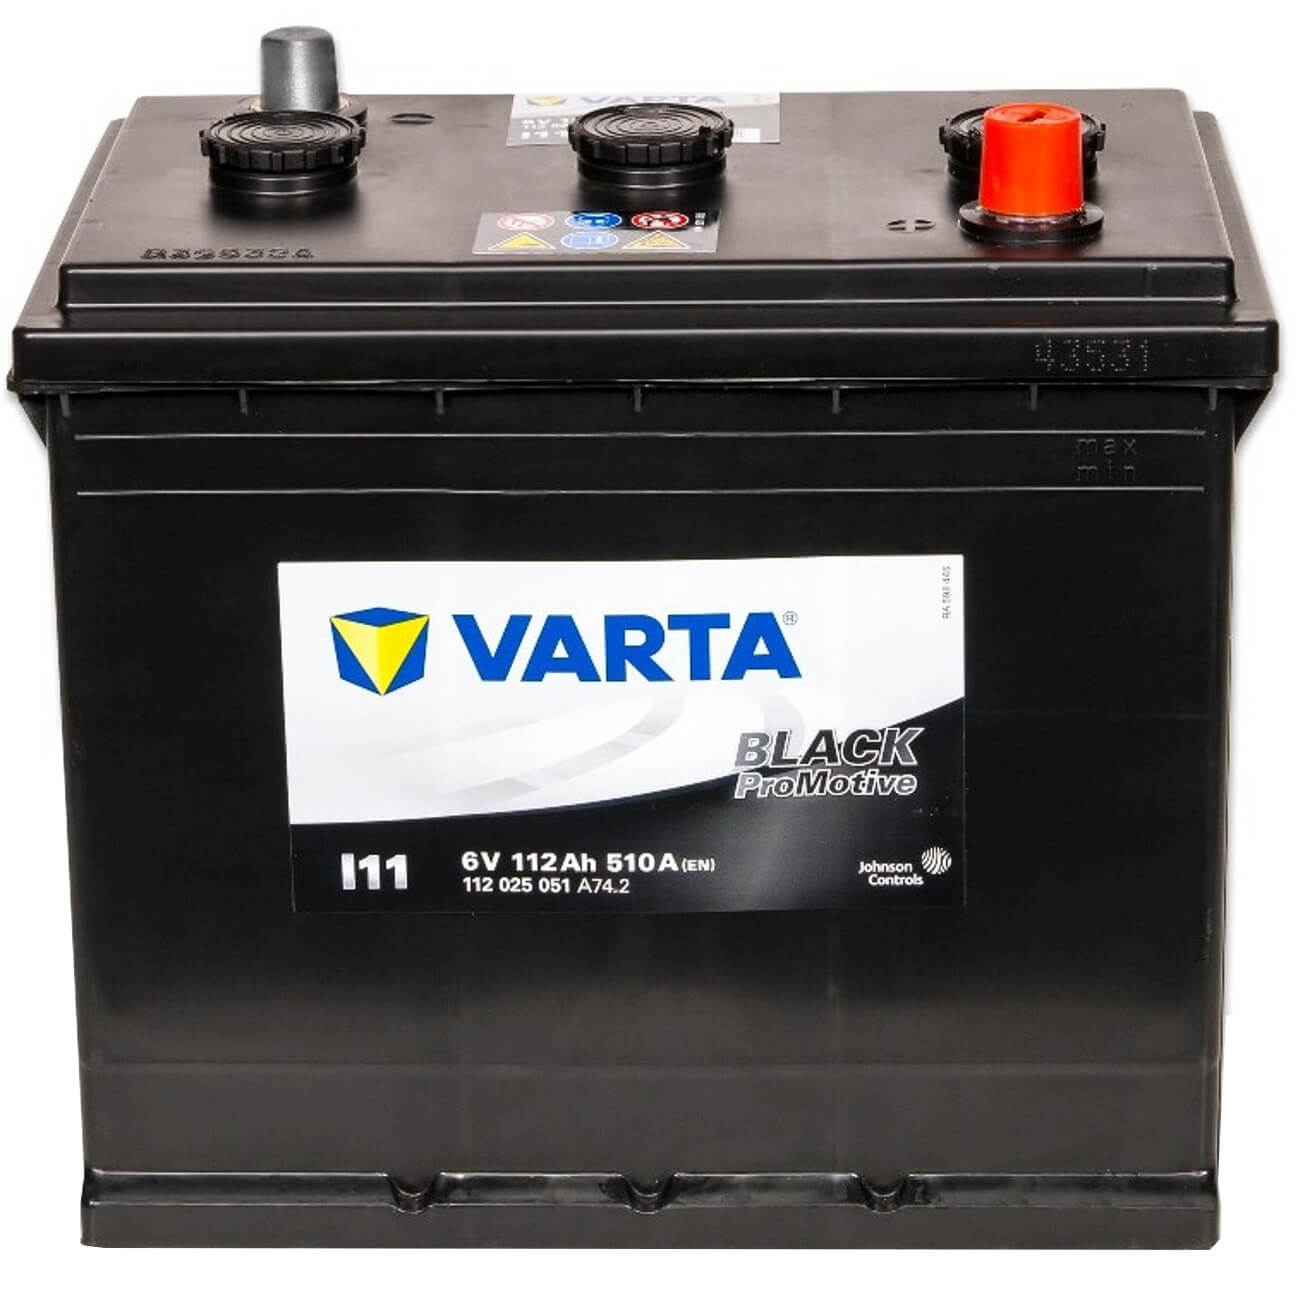 Varta I11 Oldtimer Batterie 6V 112Ah